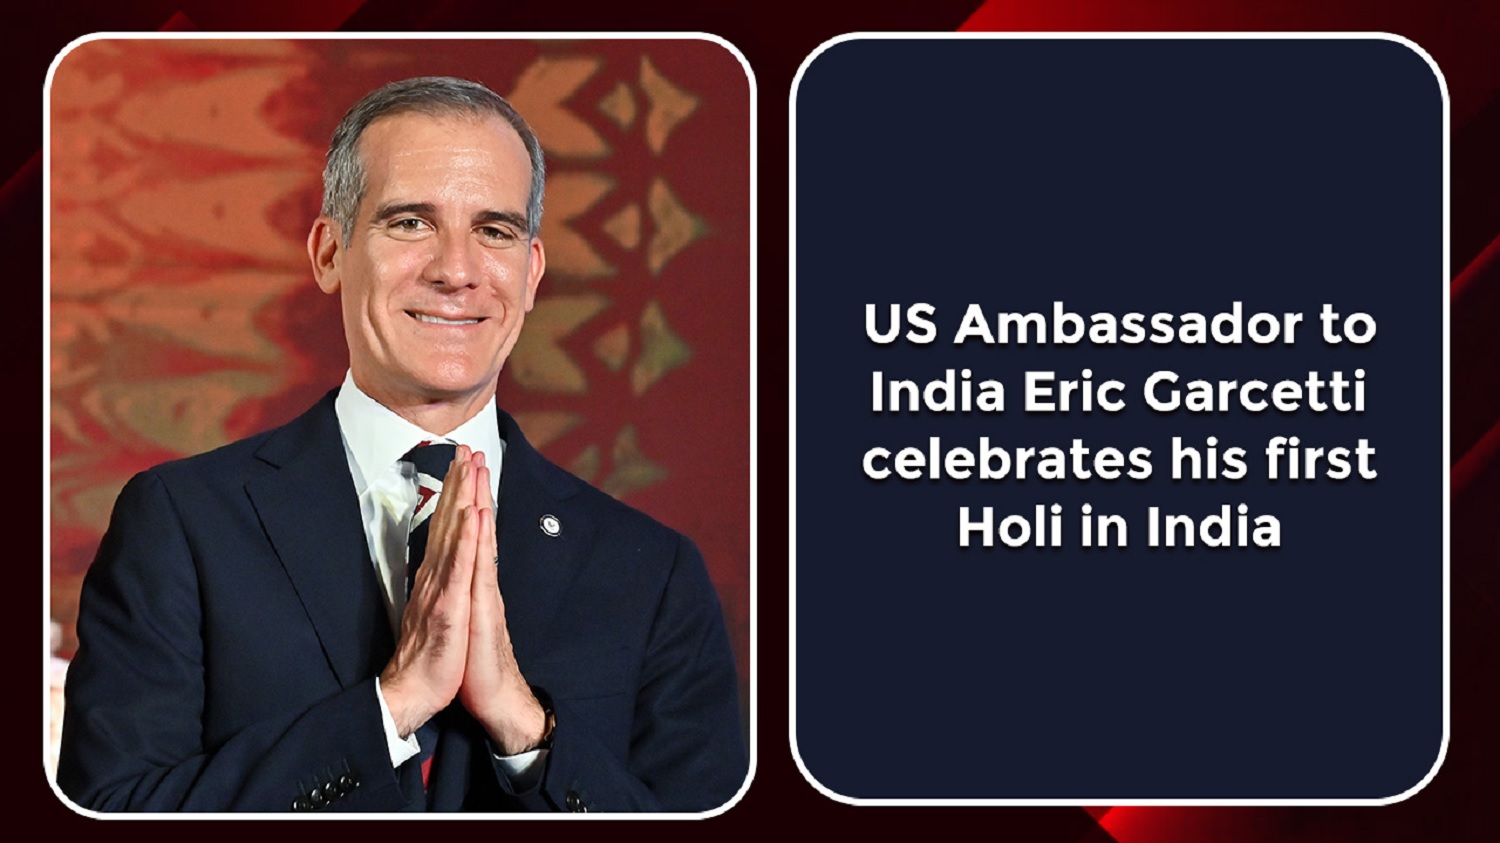 US Ambassador to India Eric Garcetti celebrates his first Holi in India